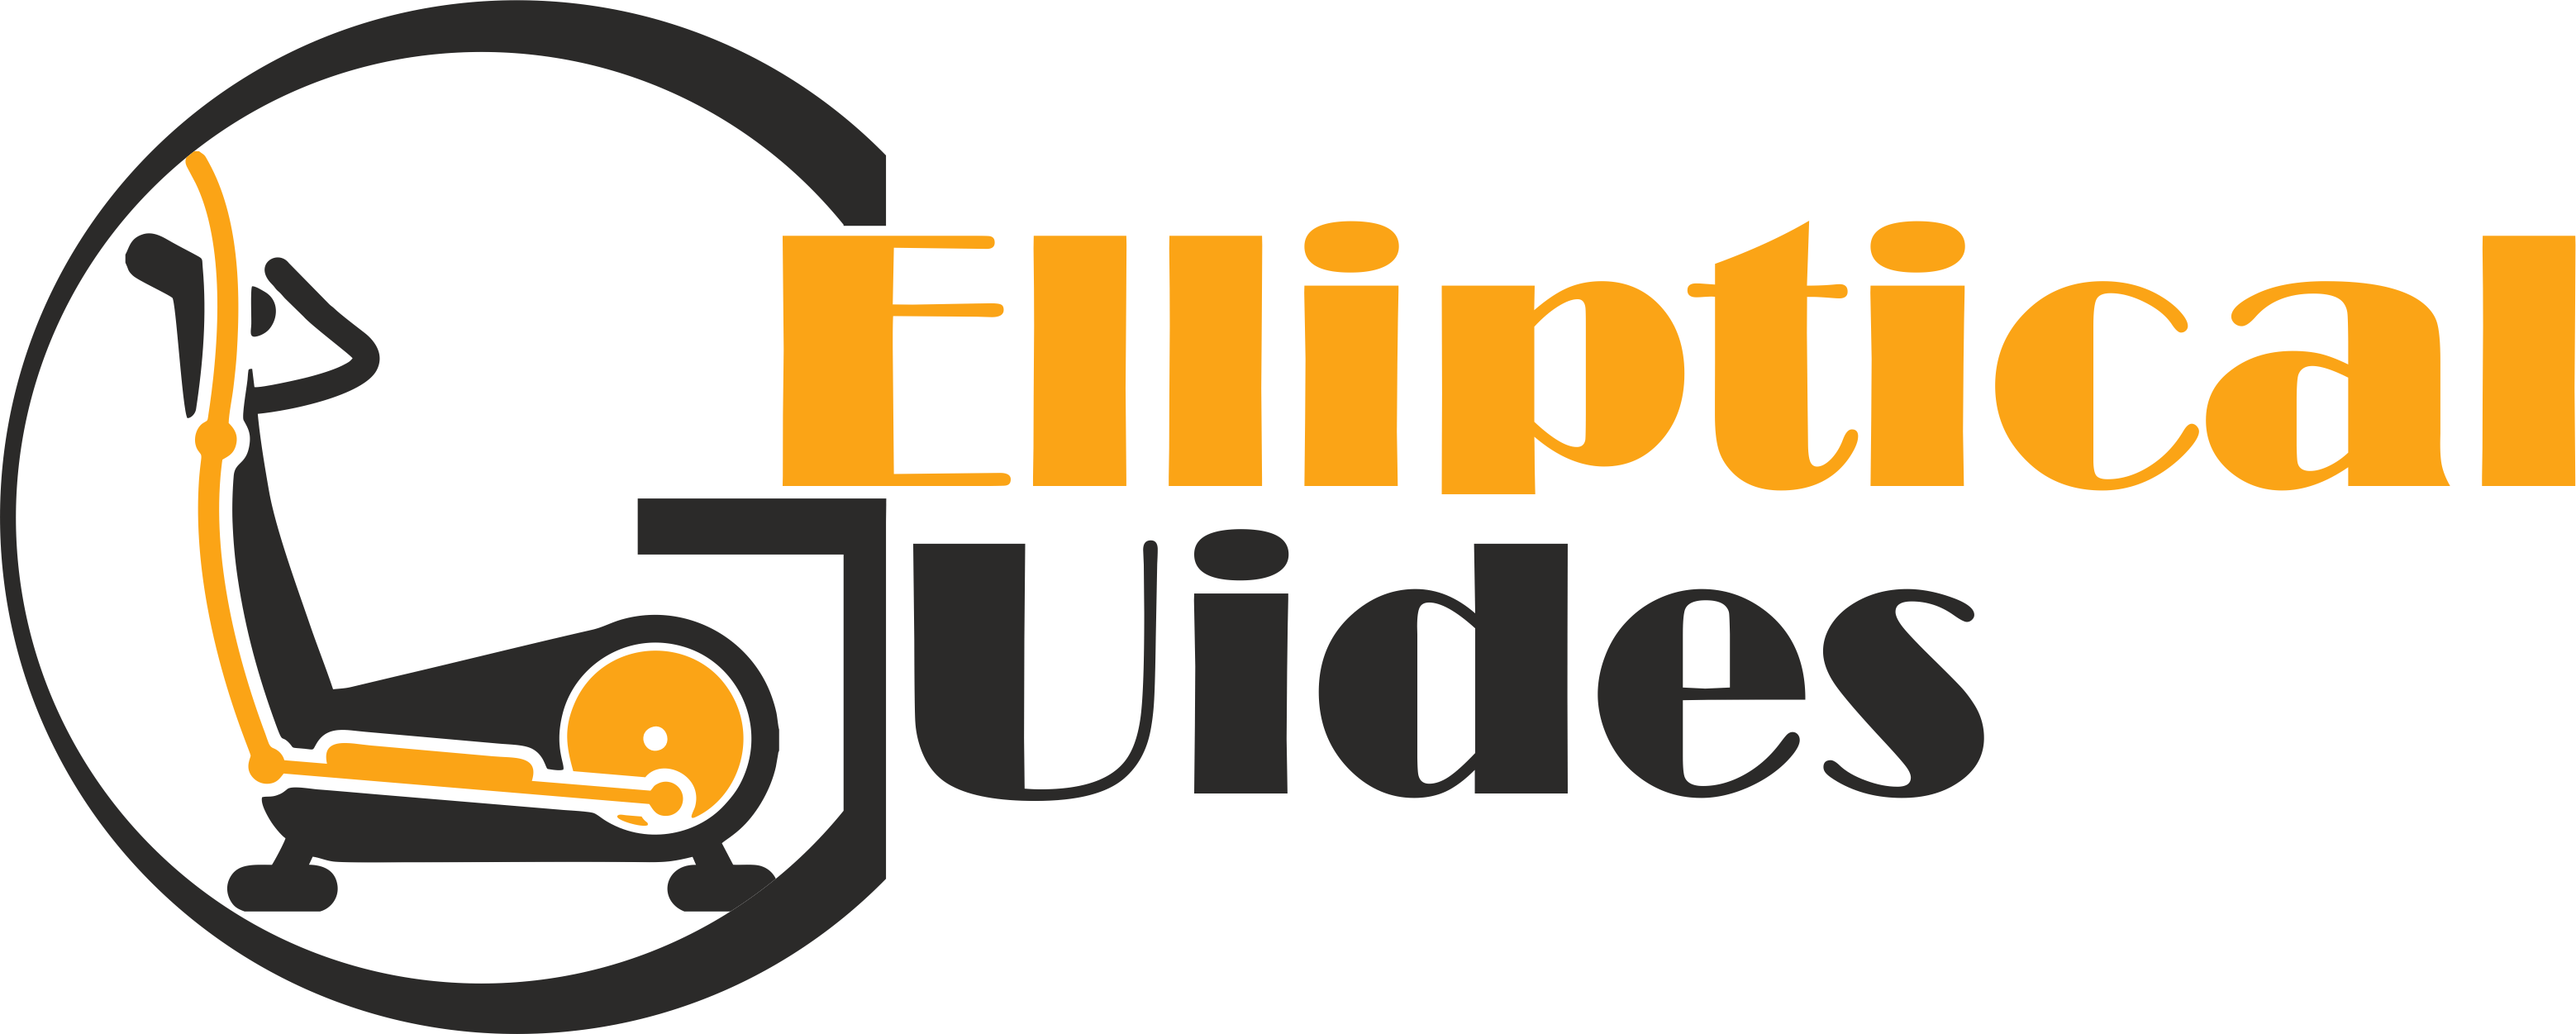 Elliptical Guides